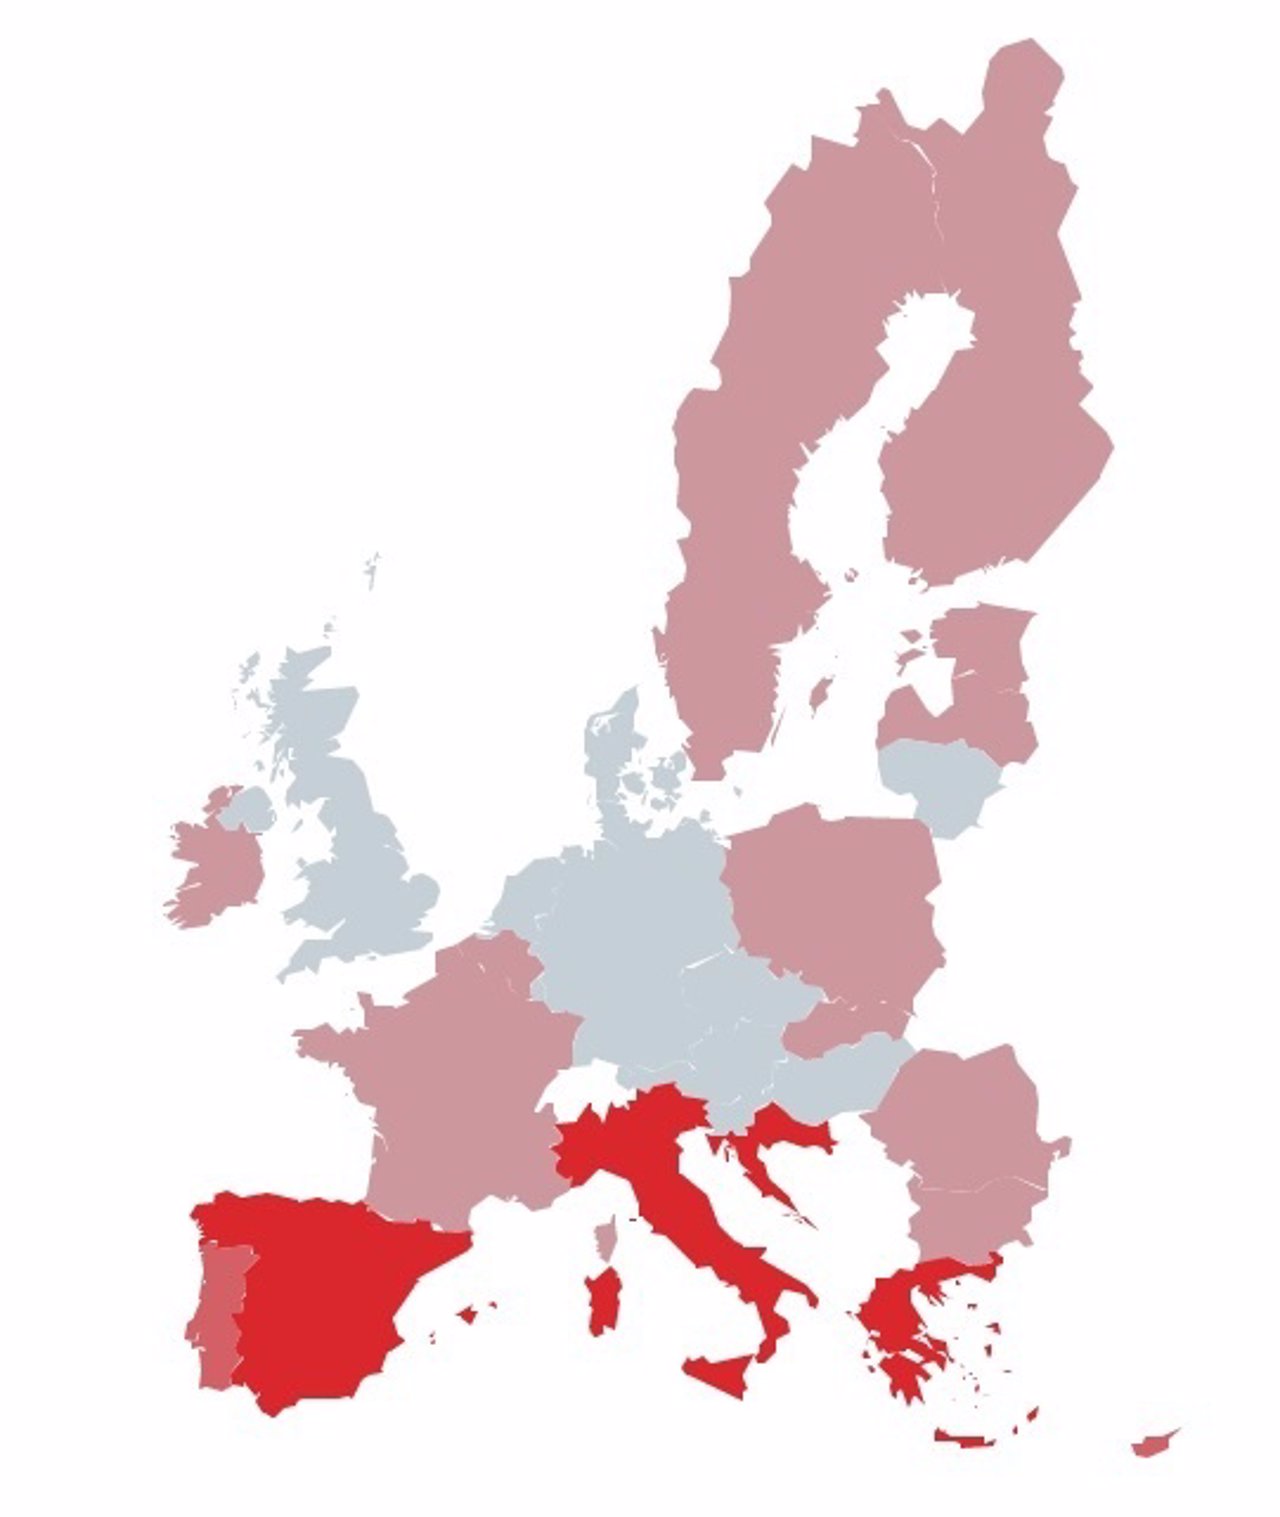 Desempleo juvenil en Europa